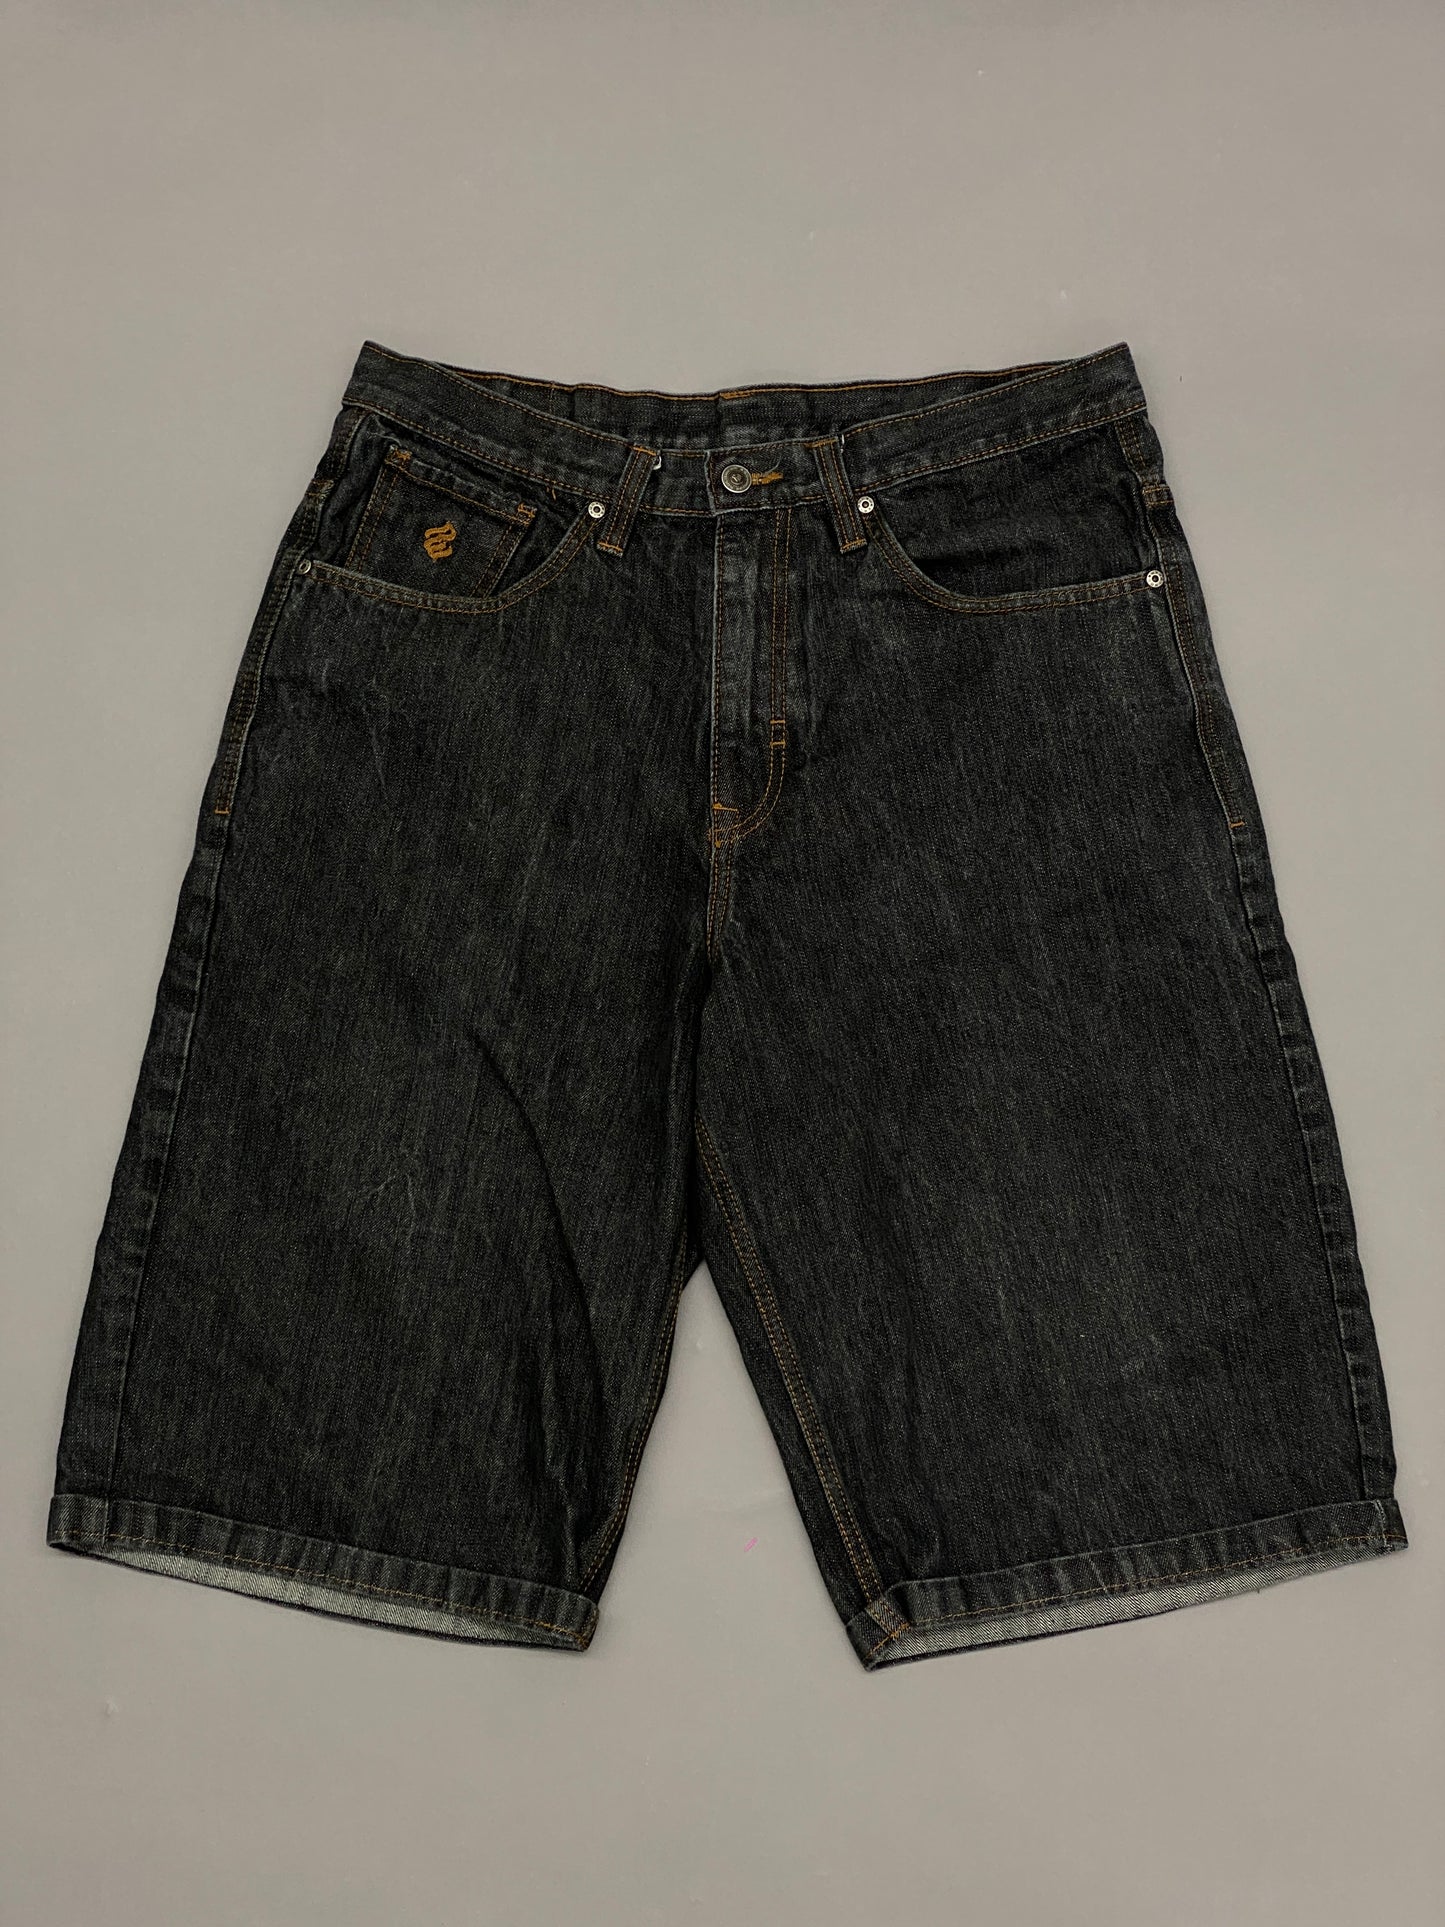 Rocawear Vintage Shorts - 36